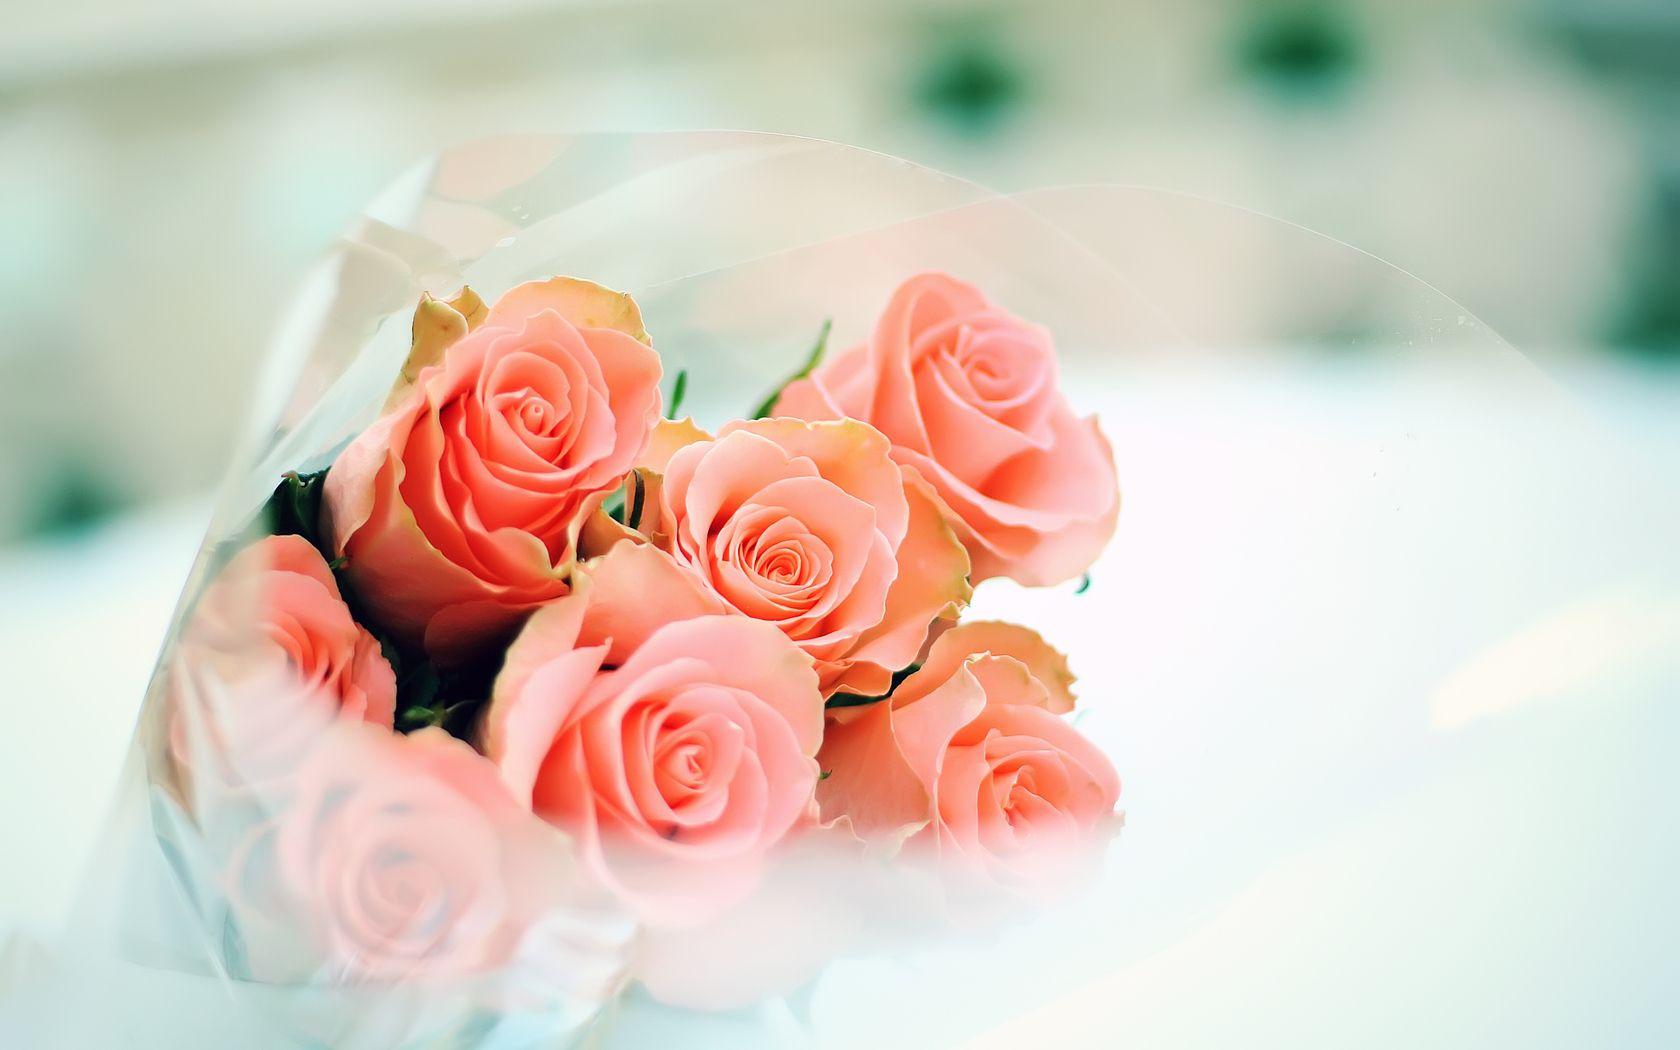 Cute Rose Bouquet Wallpaper Free HD Wallpaper Download. Roses